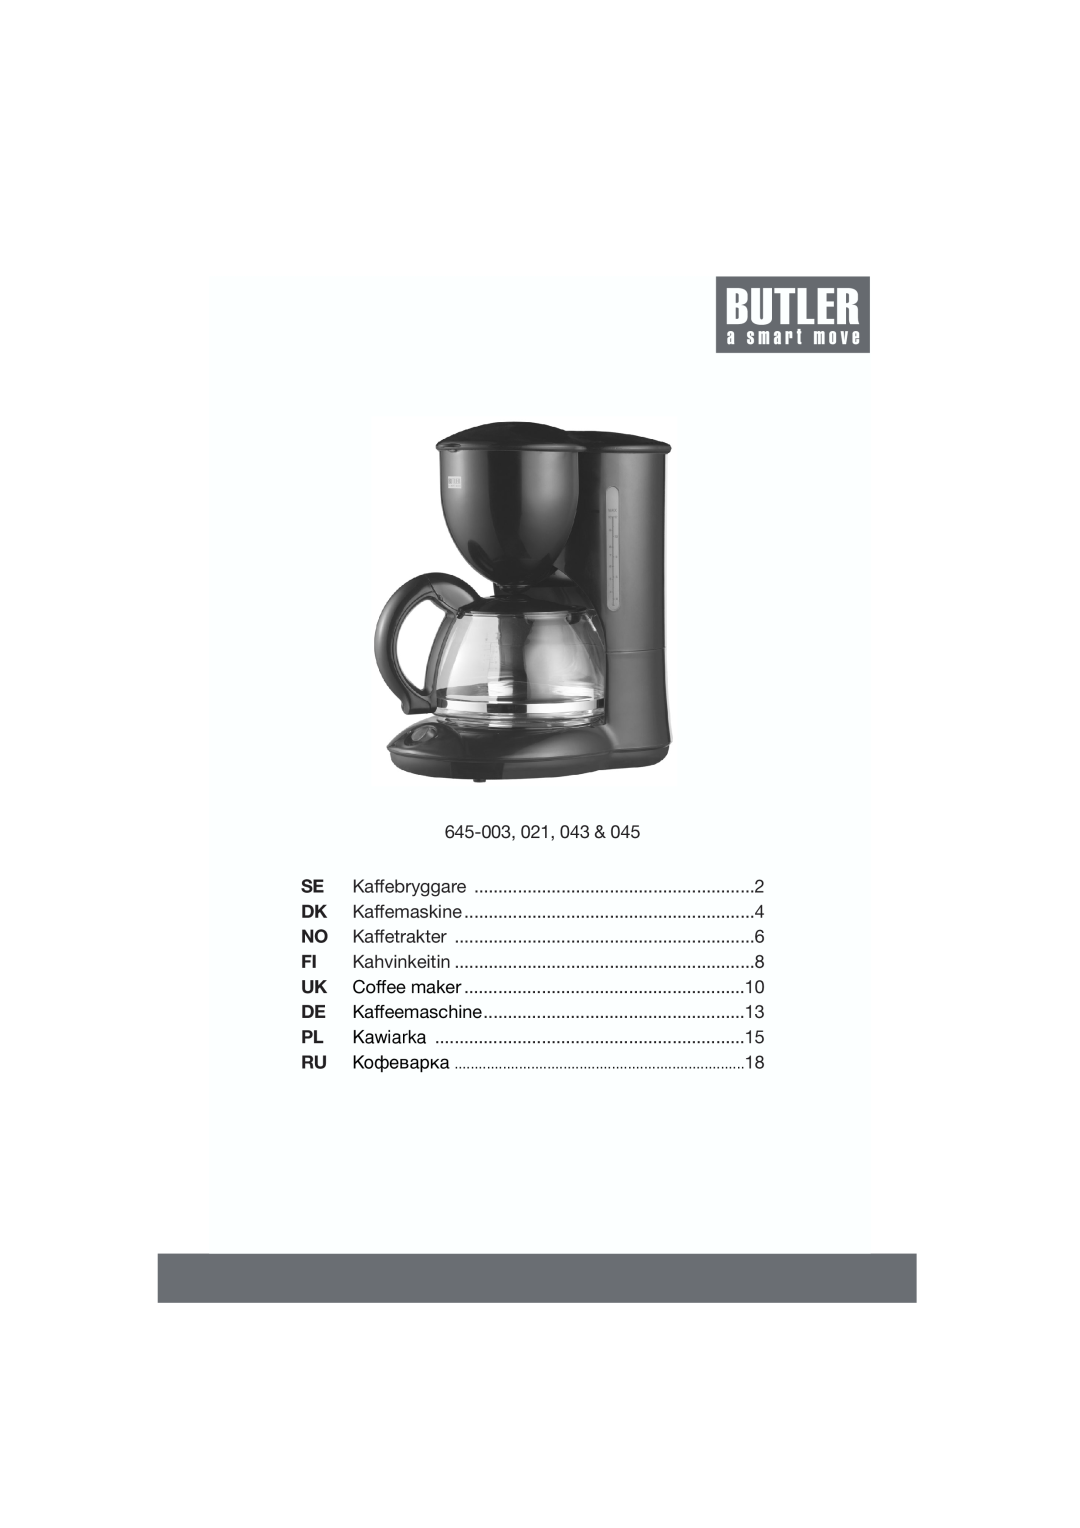 Butler 645-045 manual Kaffebryggare, Kaffemaskine, Kaffetrakter, Kahvinkeitin, Coffee maker, Kaffeemaschine, Kawiarka 